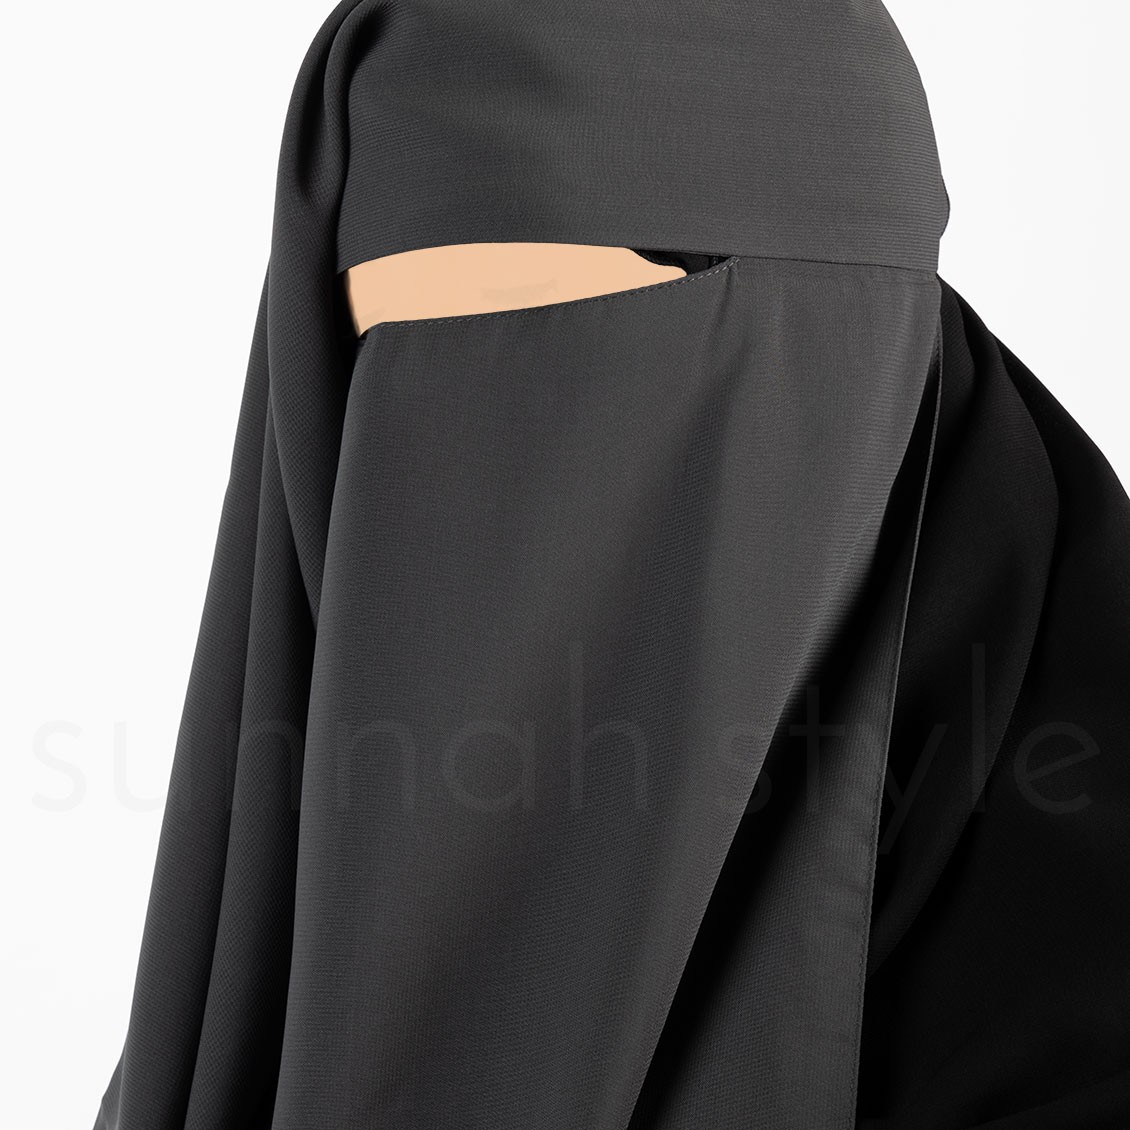 Sunnah Style Long Three Layer Niqab Dark Grey